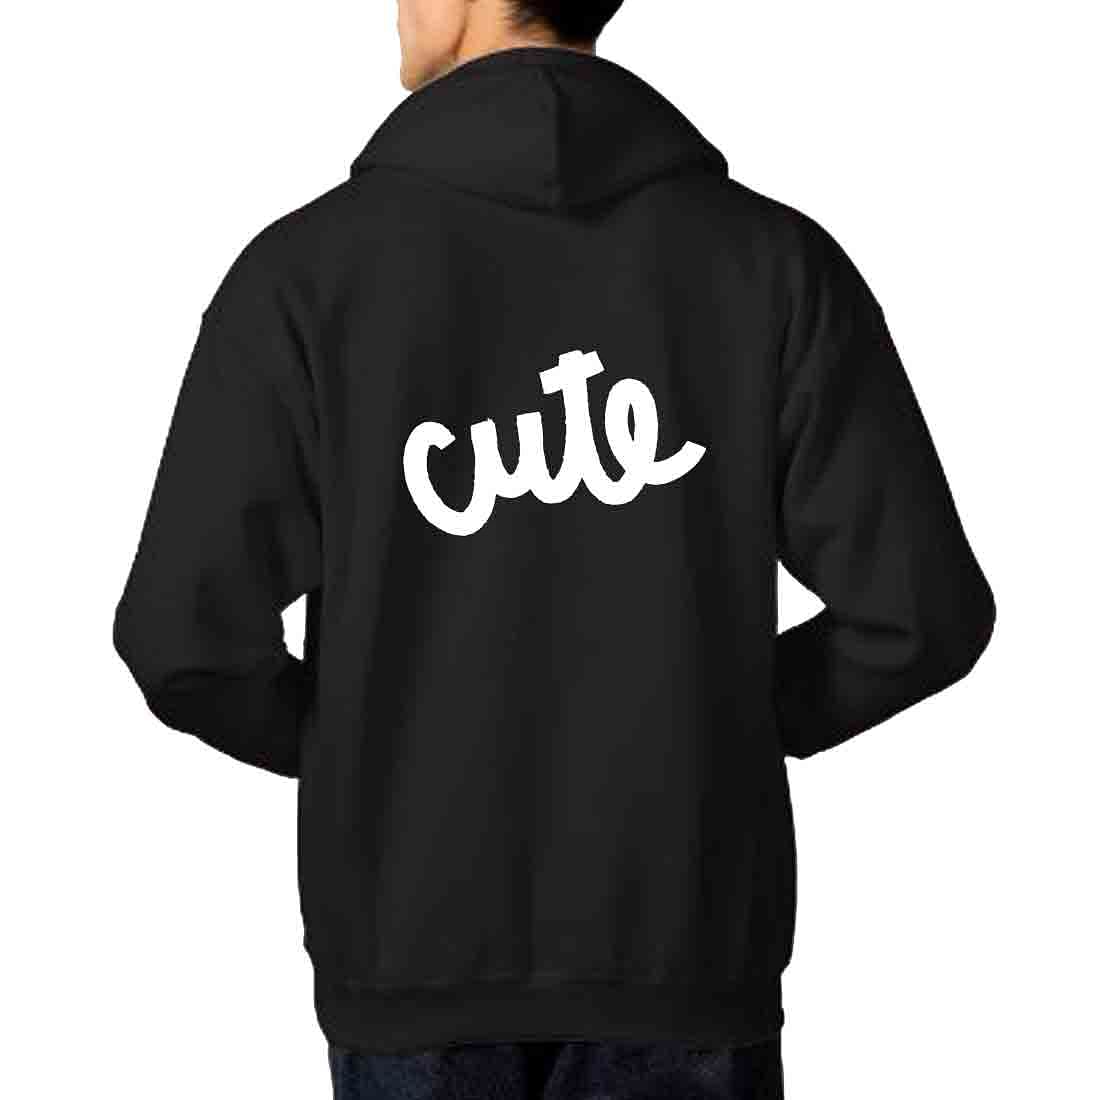 Nutcase stylish hoodie sweatshirt Unisex - Cute Nutcase